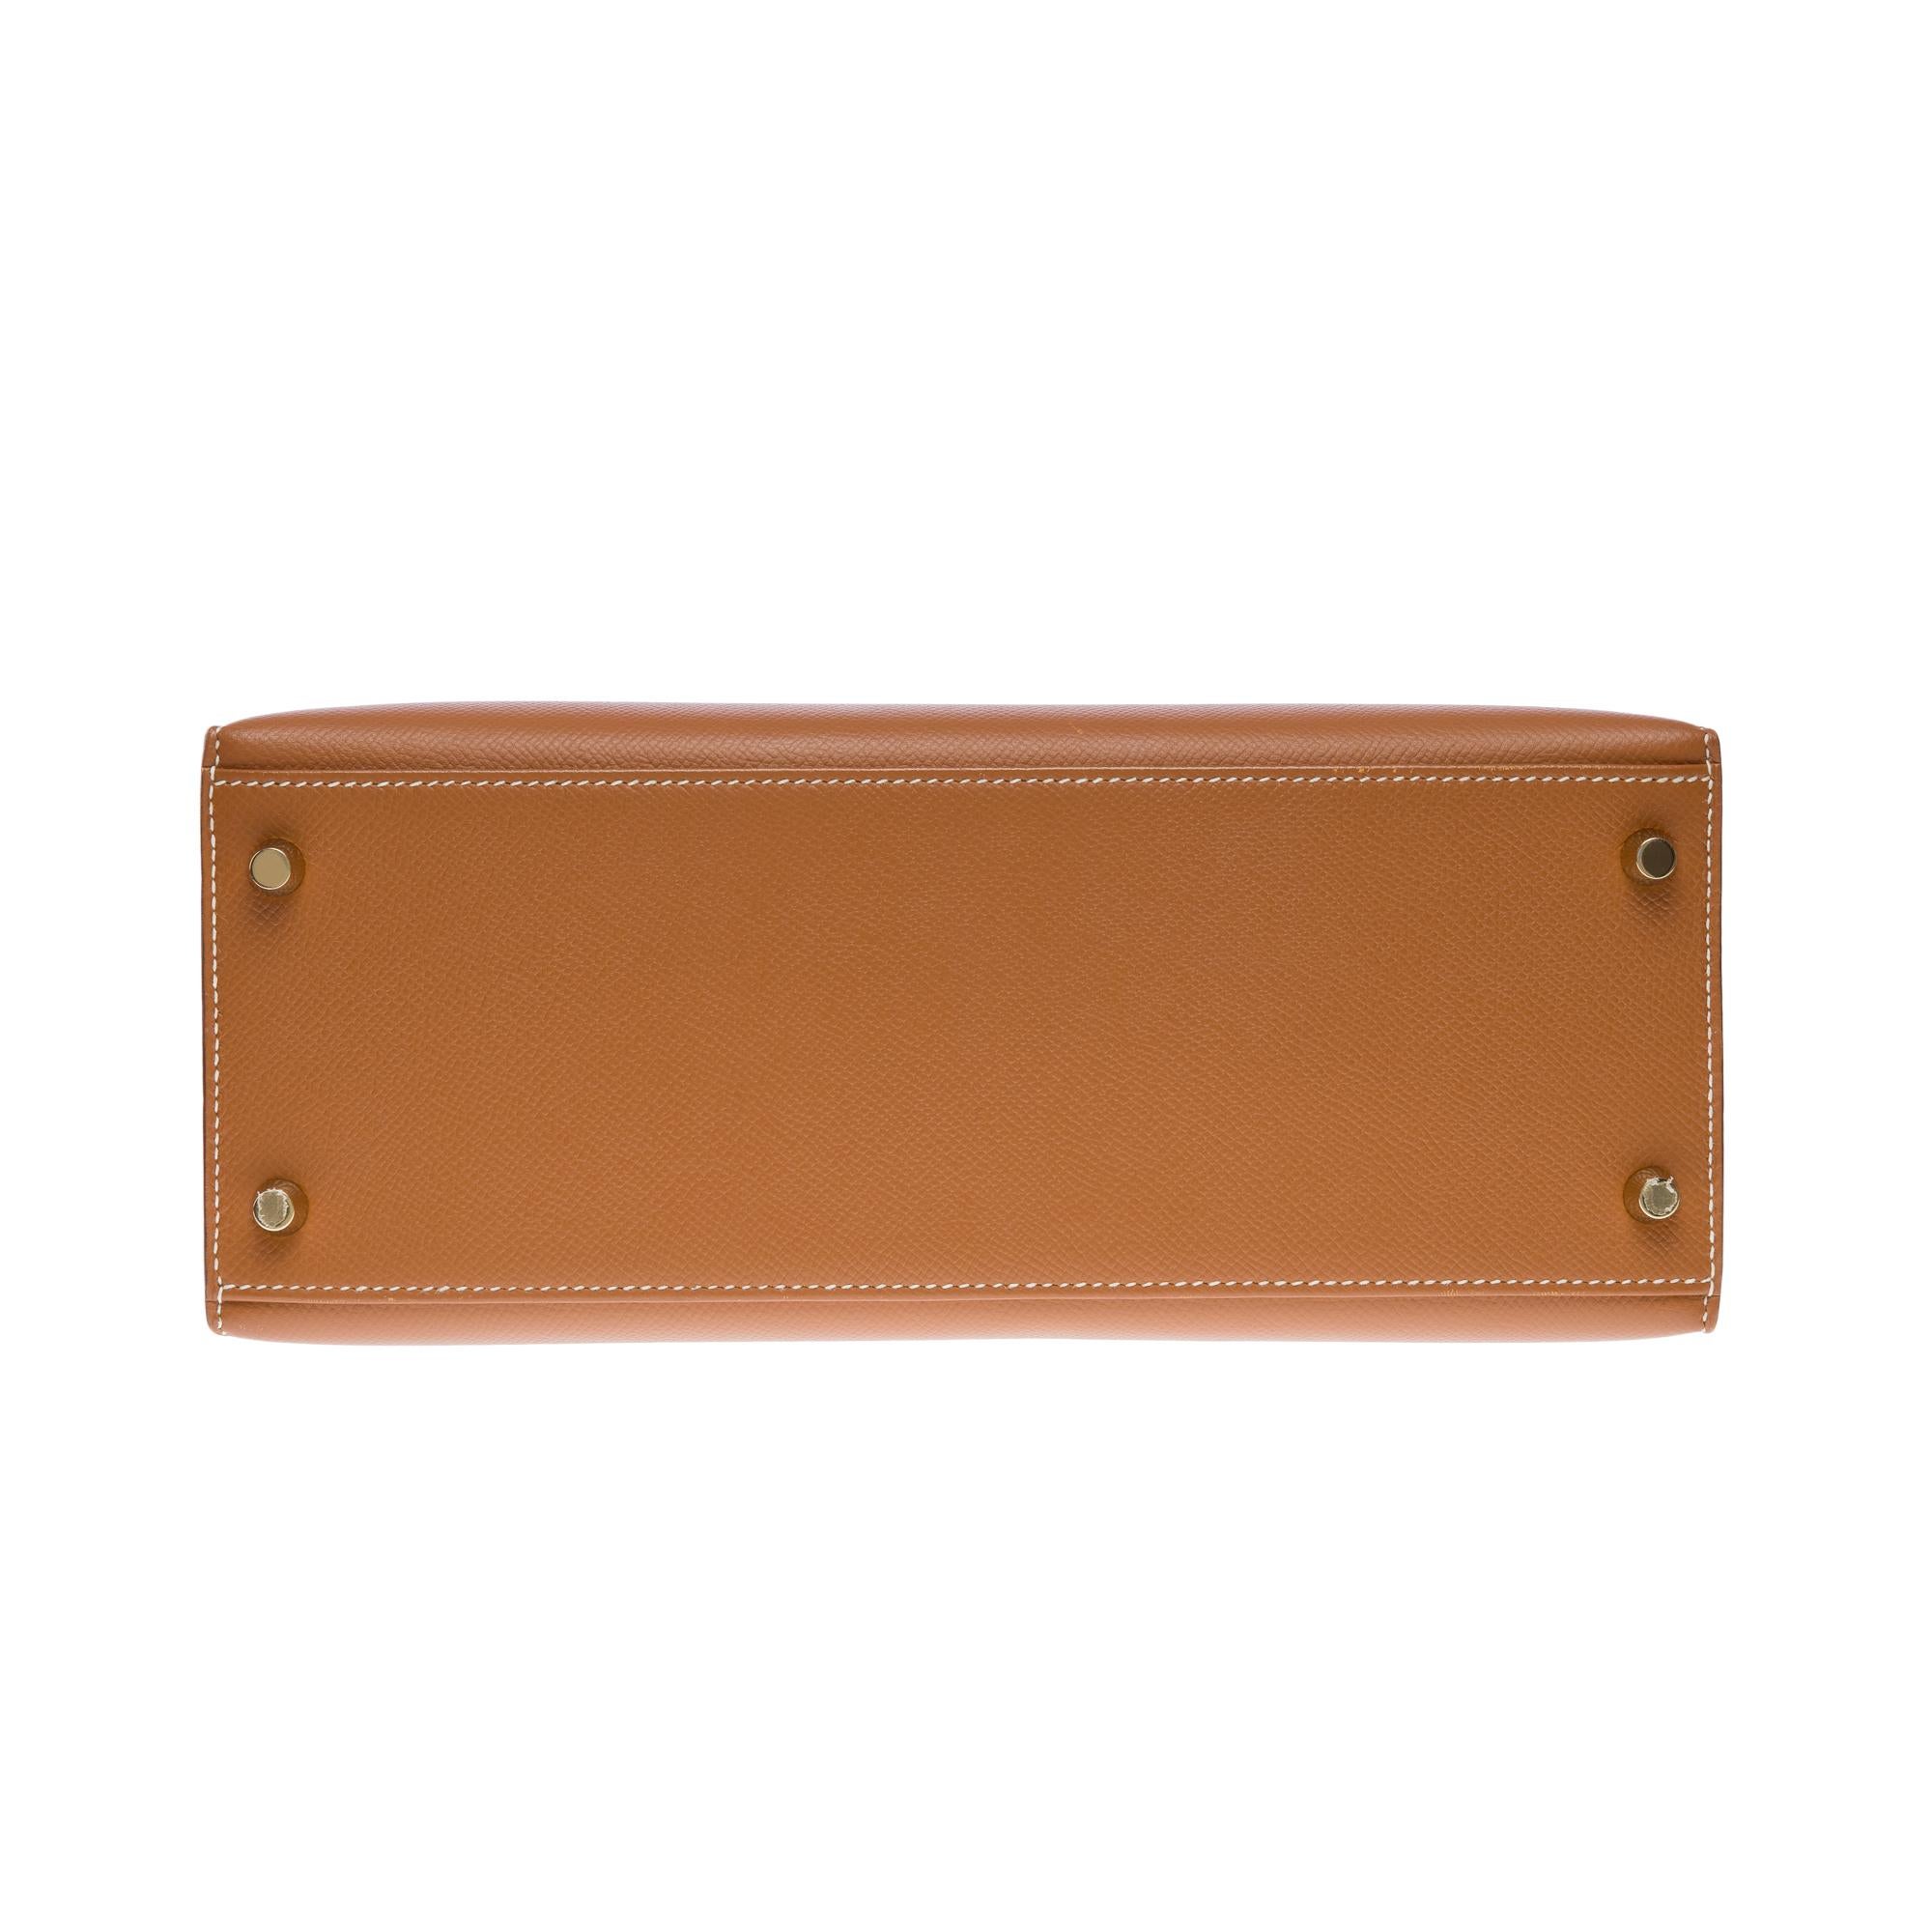 Amazing Hermès Kelly 28 sellier handbag strap in Camel/Gold Epsom leather, GHW 7